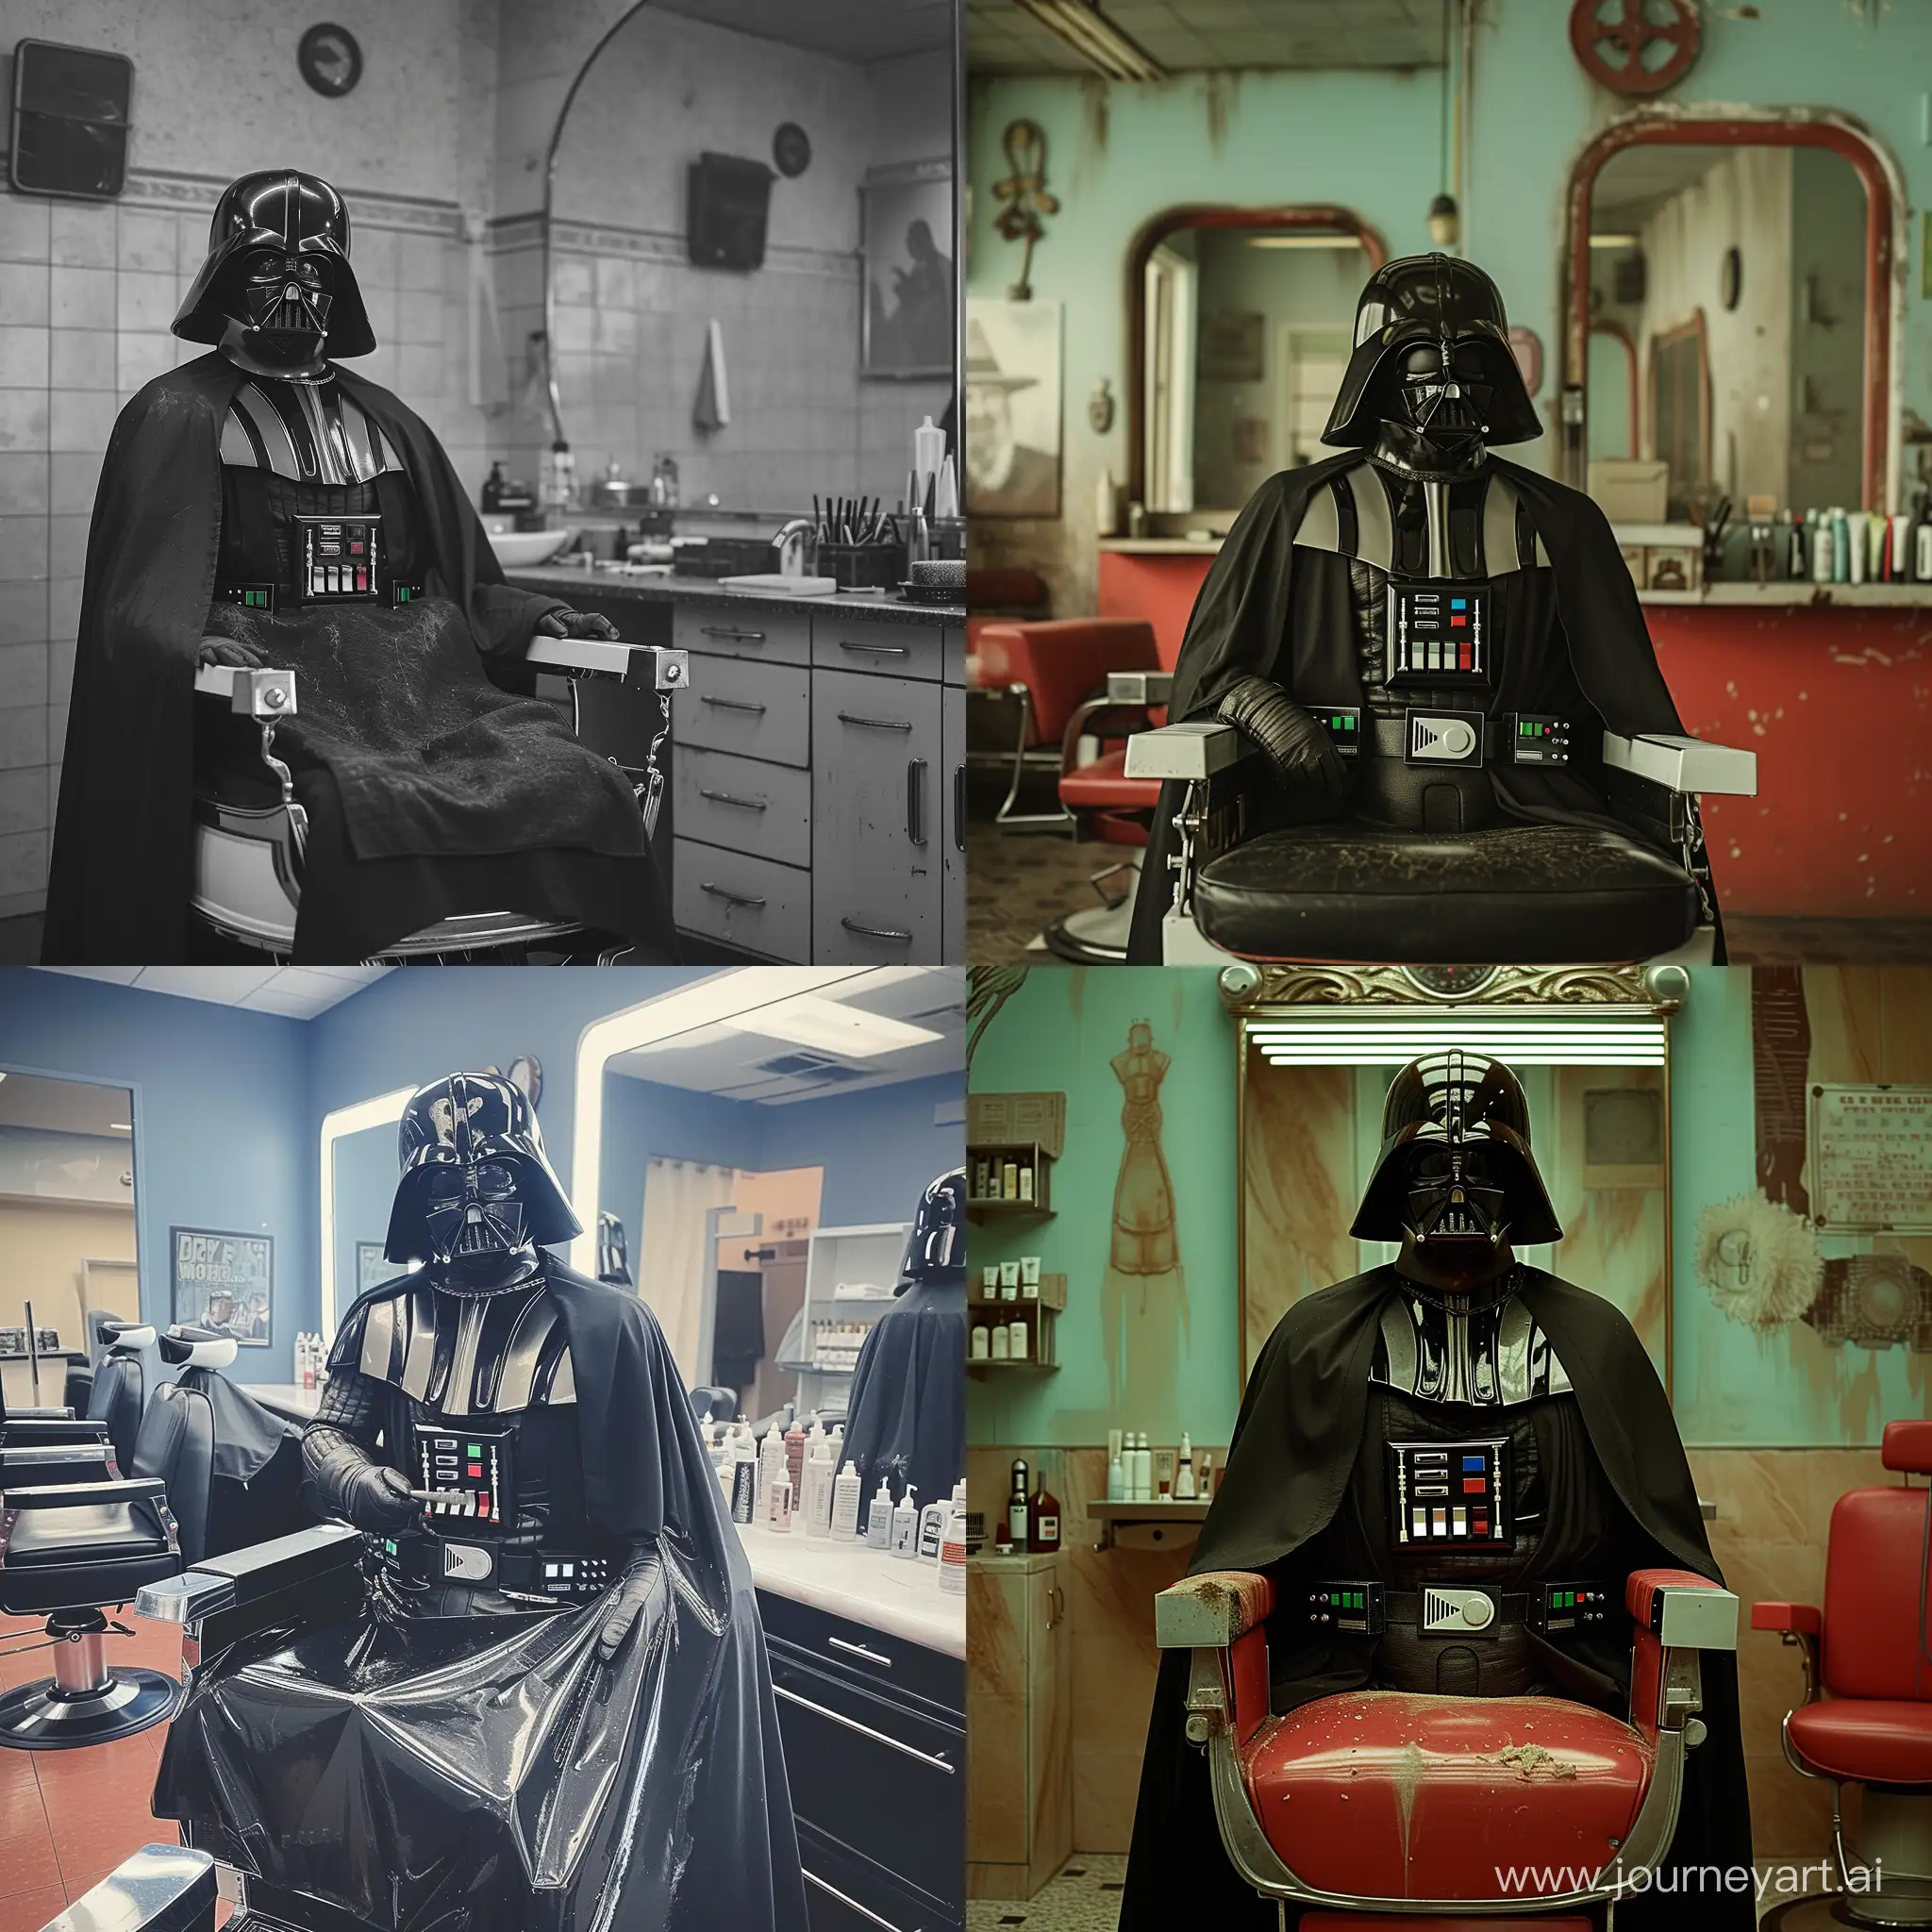 Darth Vader working in a barber shop